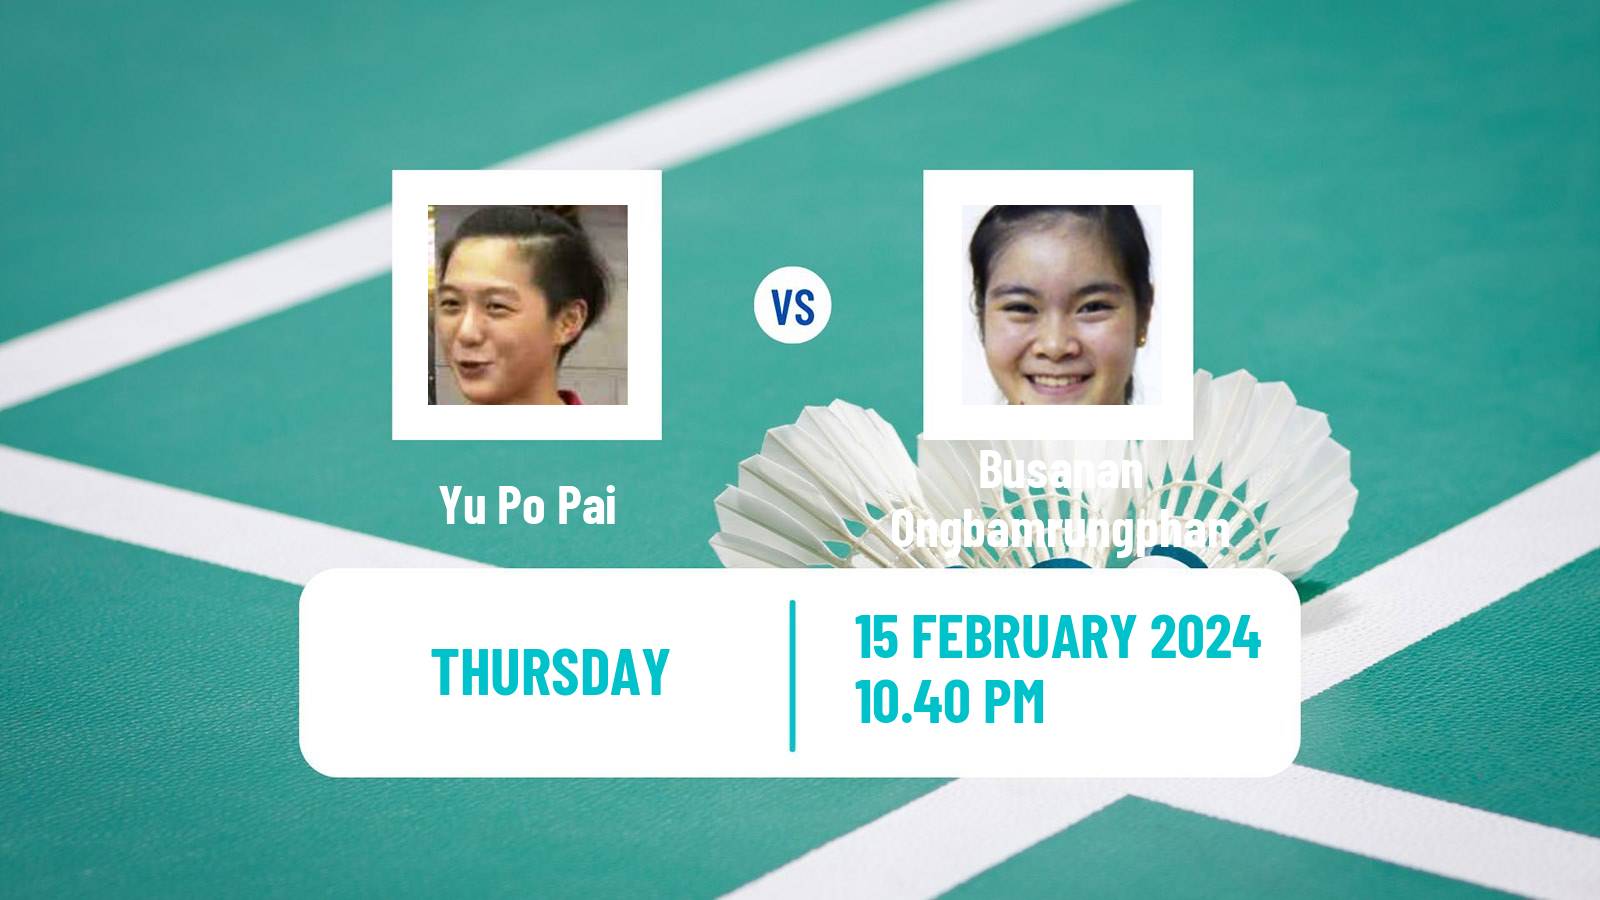 Badminton BWF Asia Championships Teams Women Yu Po Pai - Busanan Ongbamrungphan